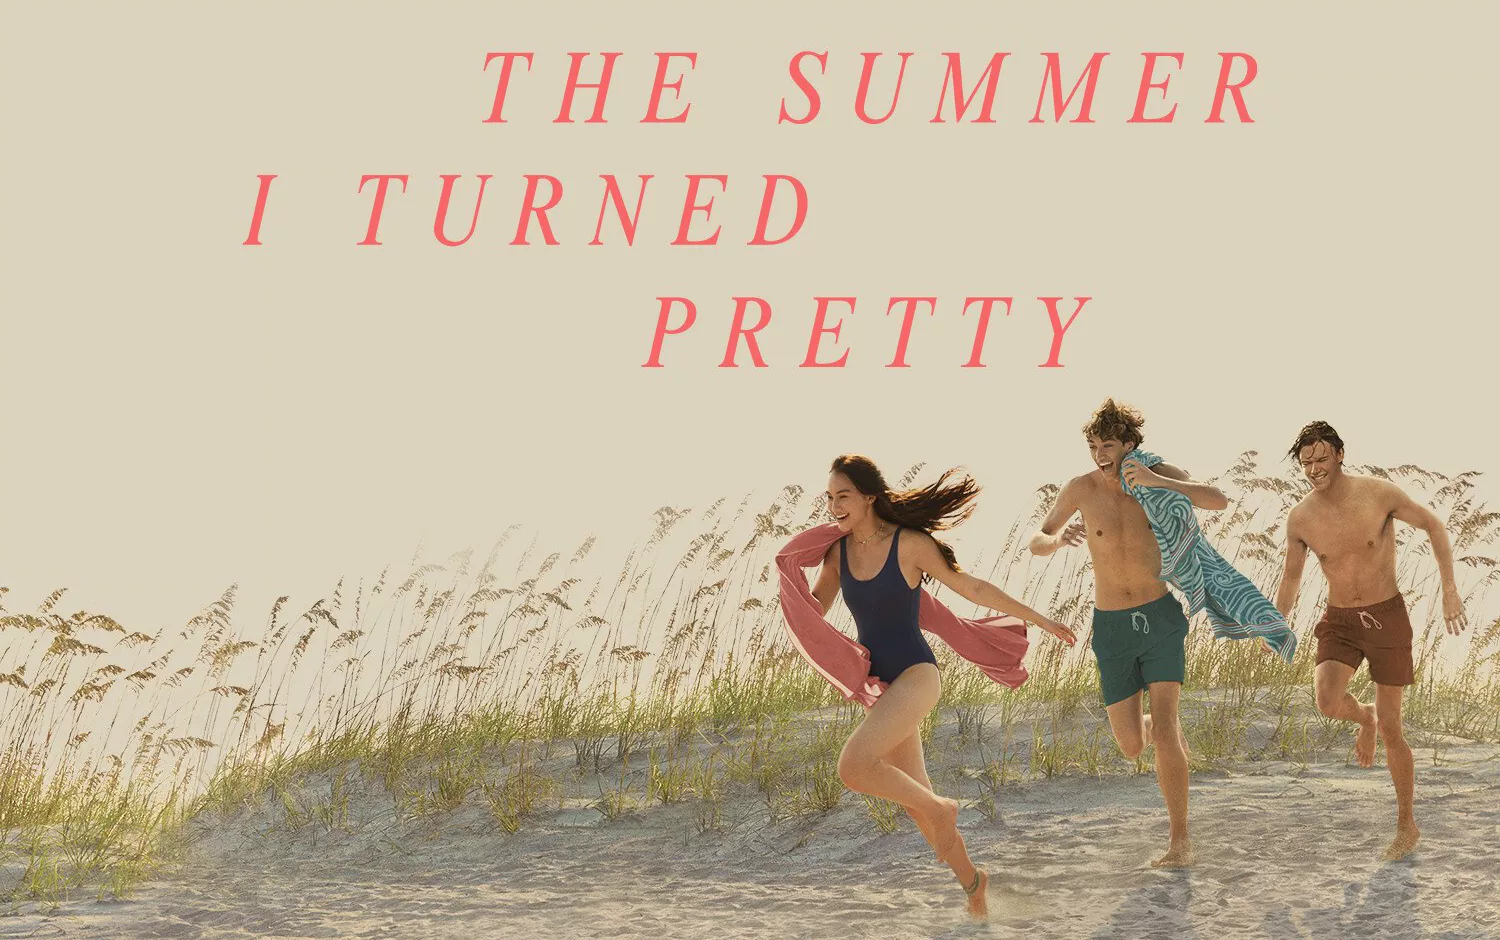 Trailer Από Την Νέα Σειρά "The Summer I Turned Pretty"